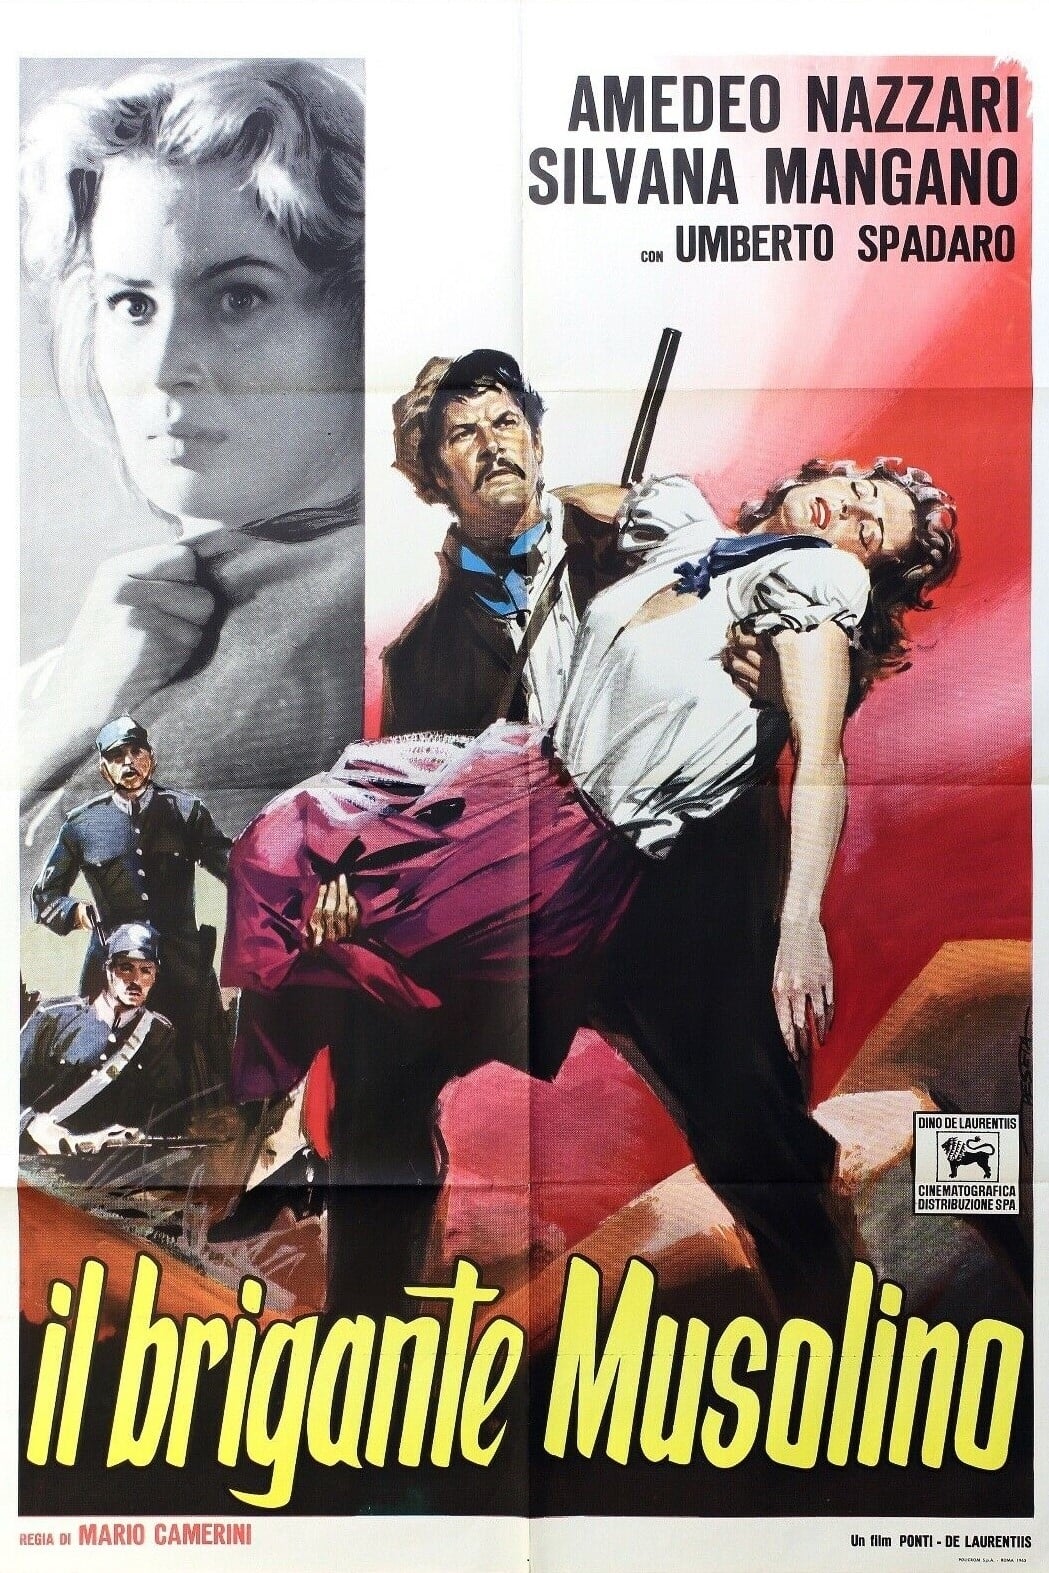 Outlaw Girl (1950)